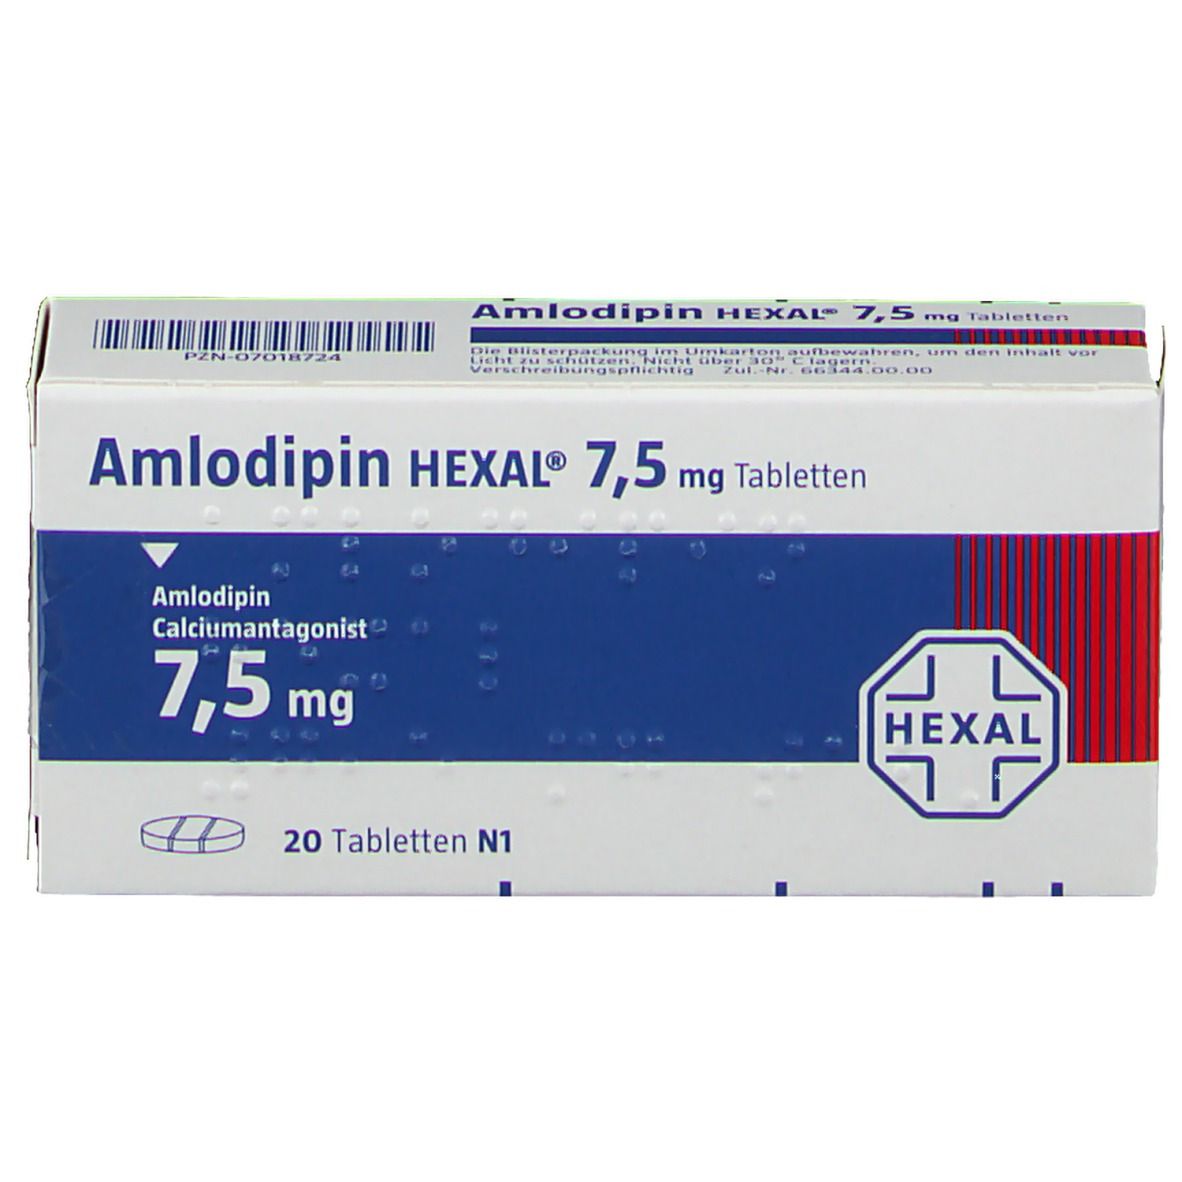 Amlodipin HEXAL® 75 mg